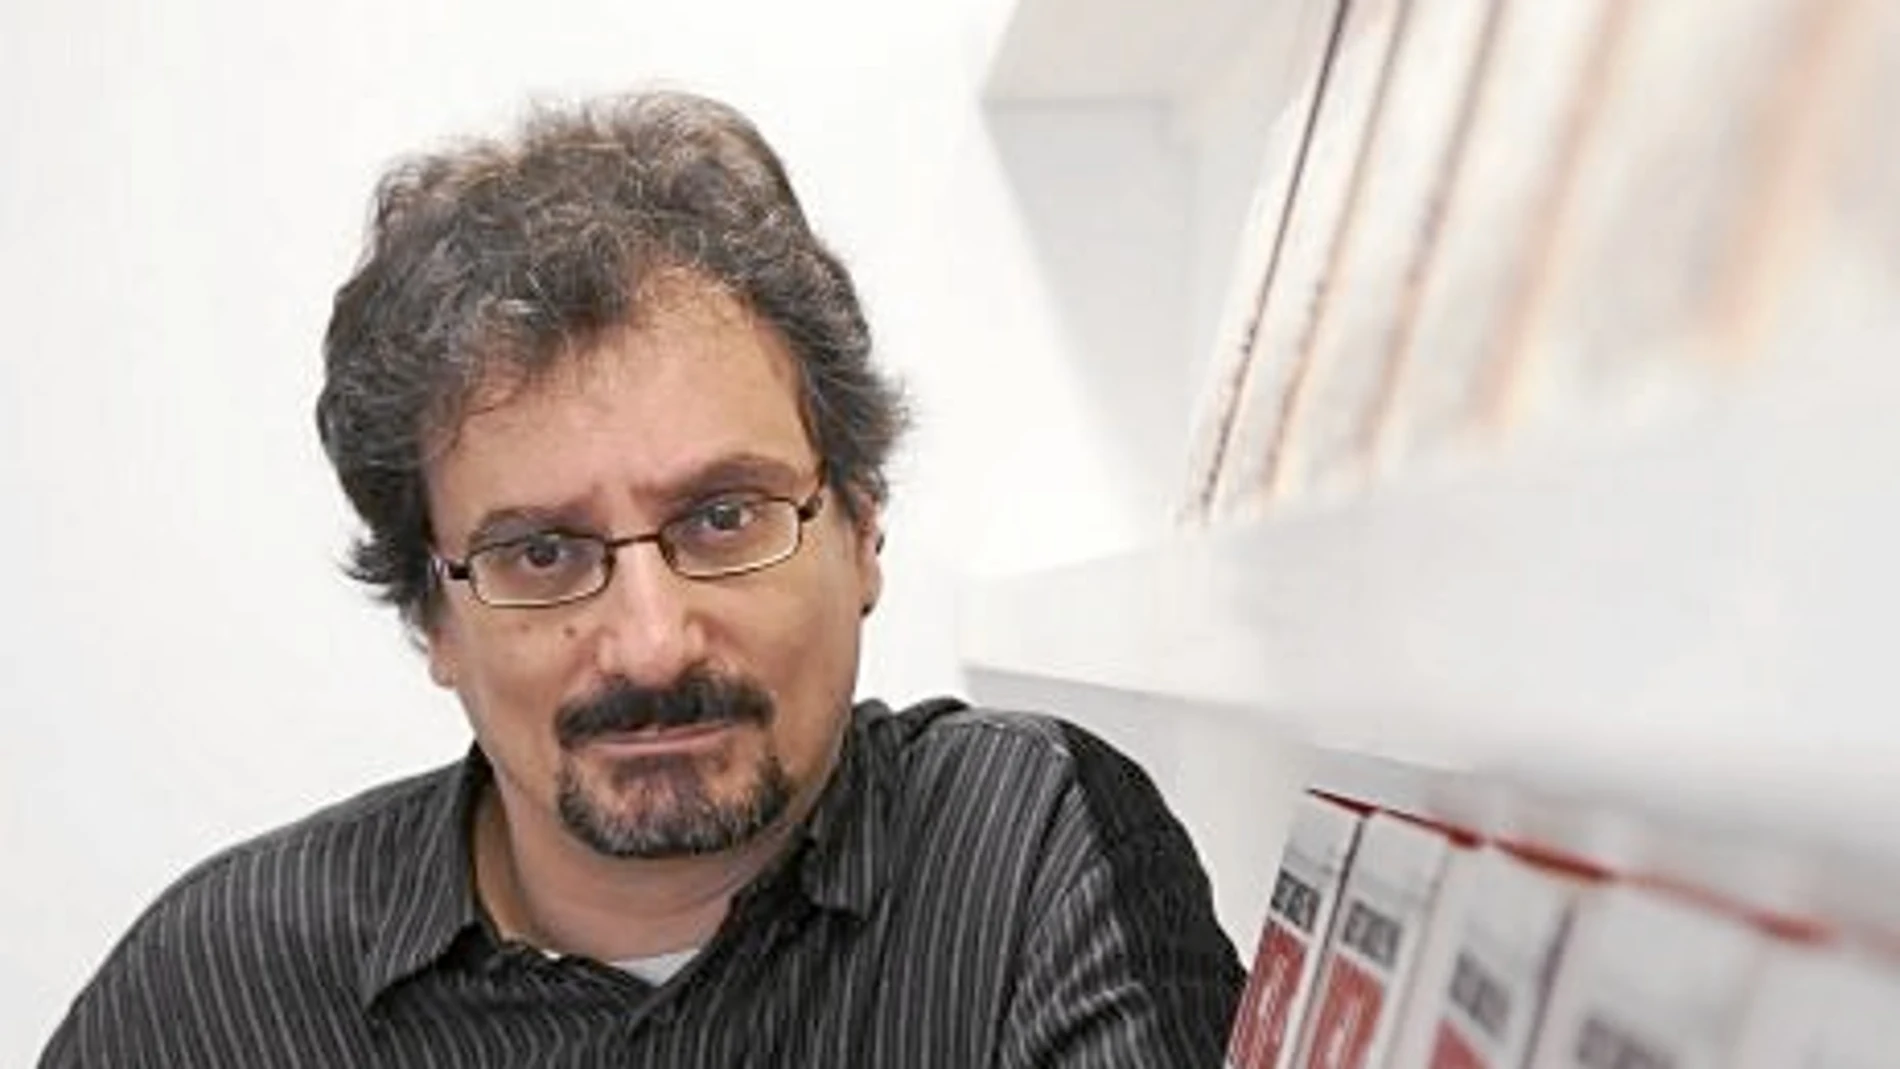 Albert Sánchez Piñol